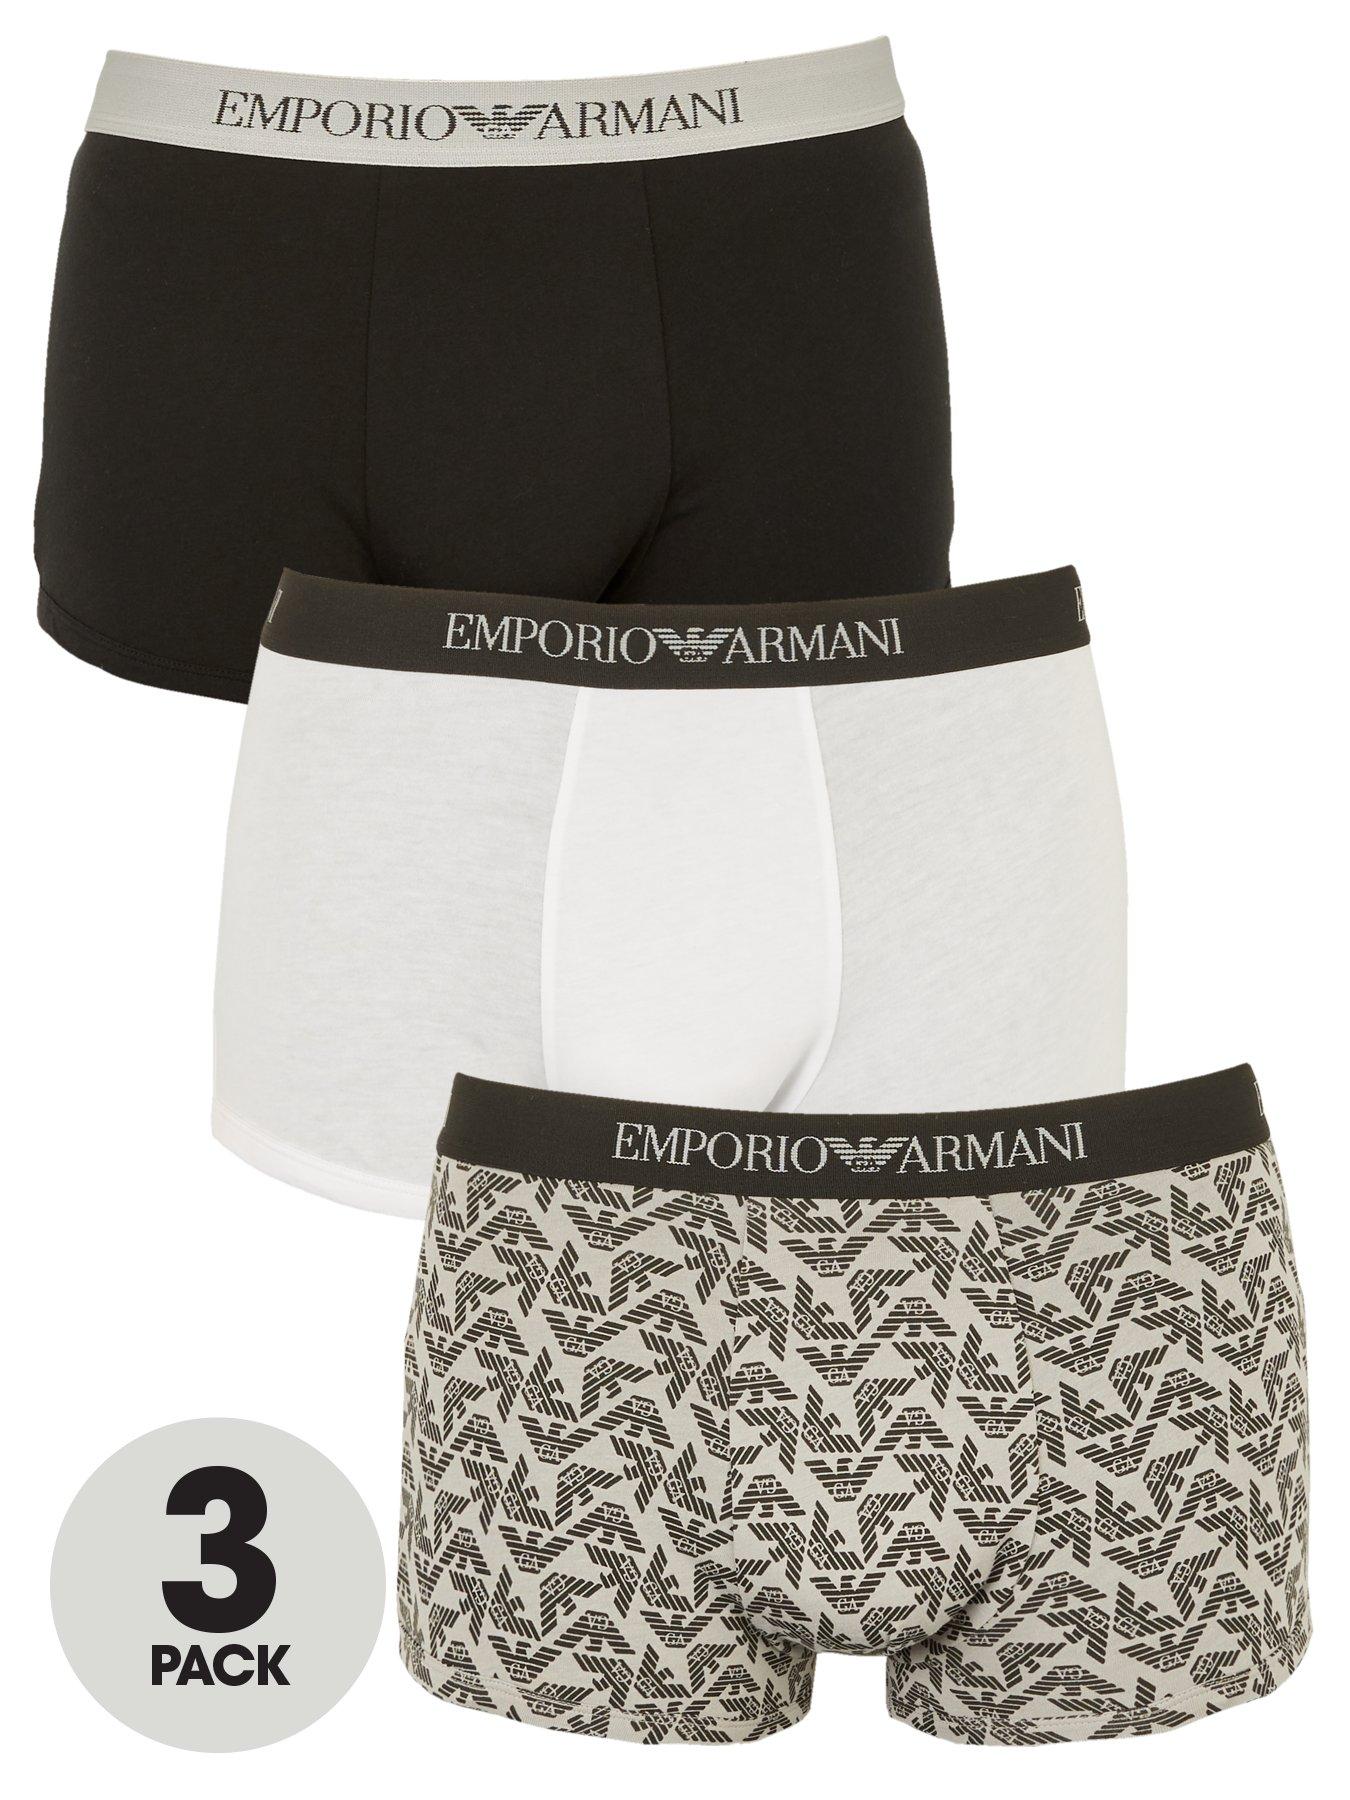 Emporio Armani Bodywear Pure Cotton Mixed Trunks (3 Pack) -  Black/White/Grey 